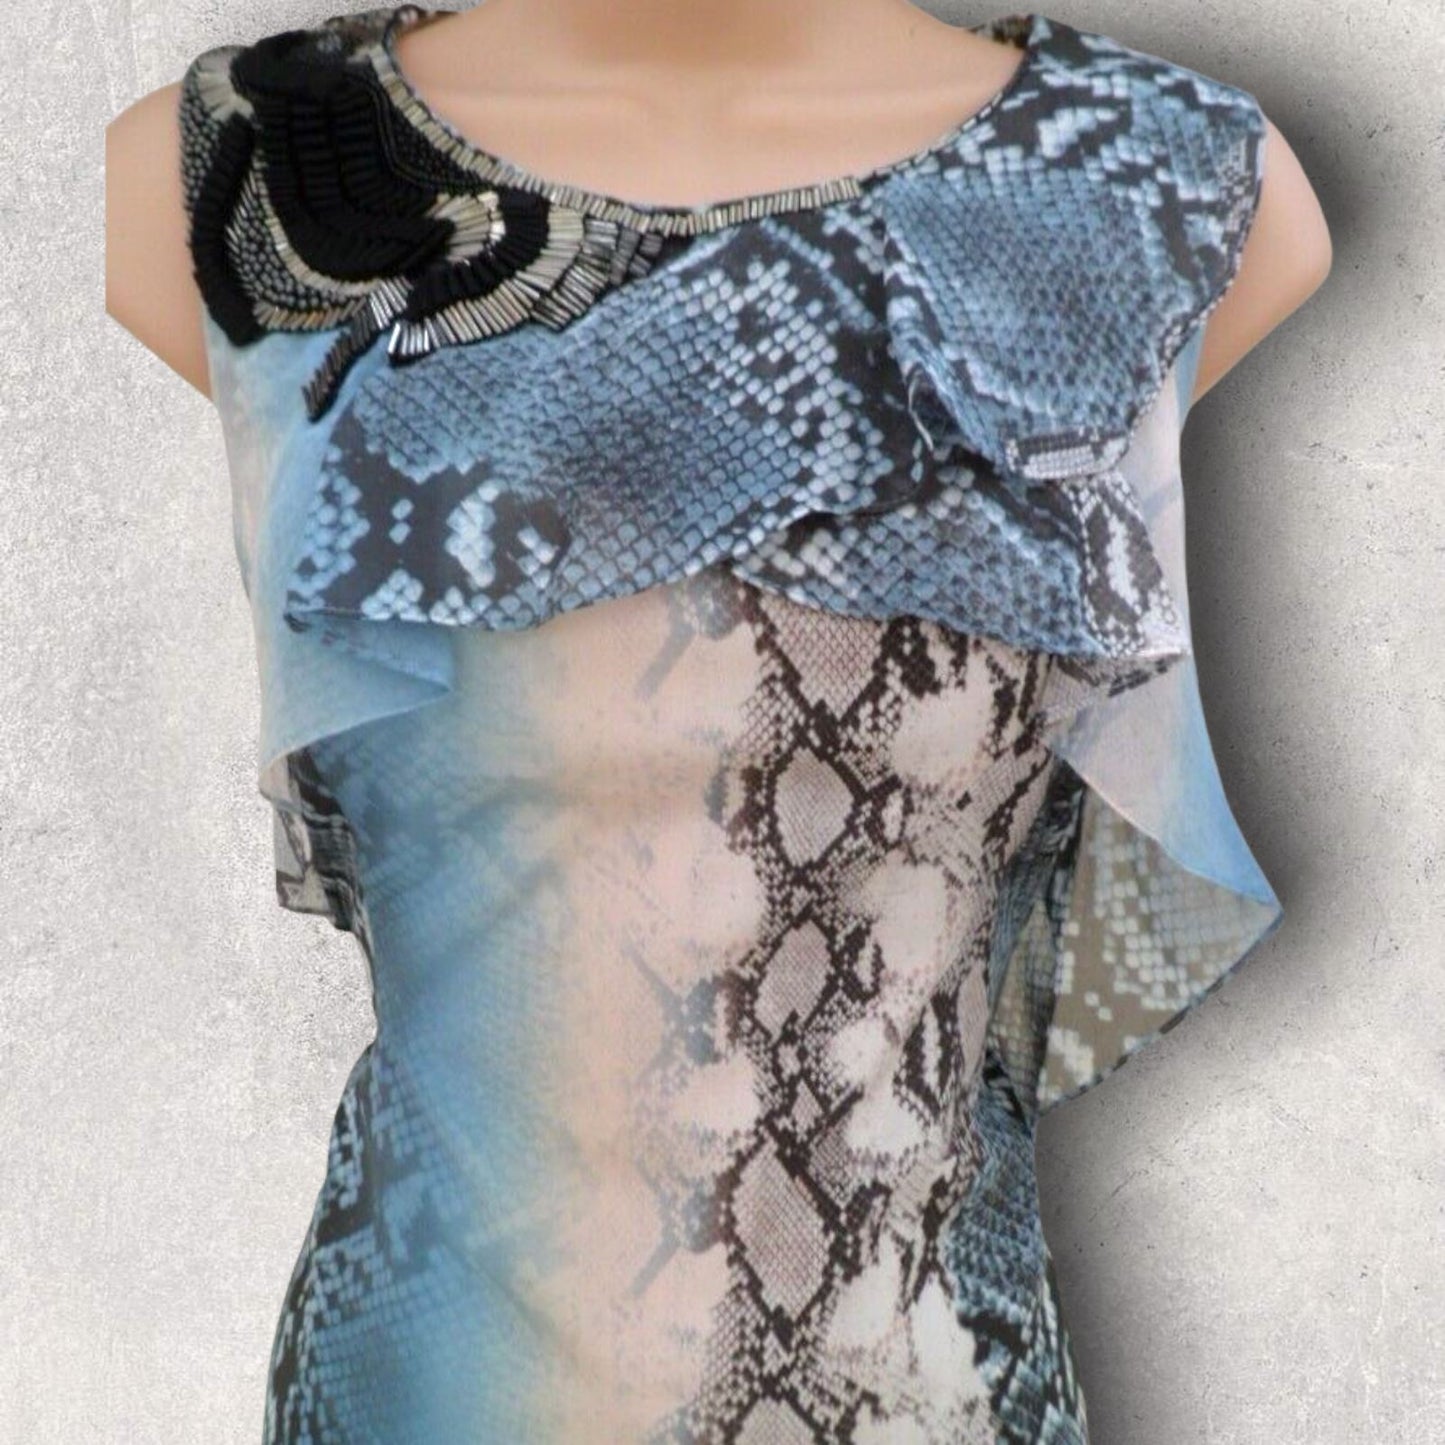 Karen Millen, Snake Print, Silk Embellished Dress UK 12 US 8 EU 40 BNWT Timeless Fashions